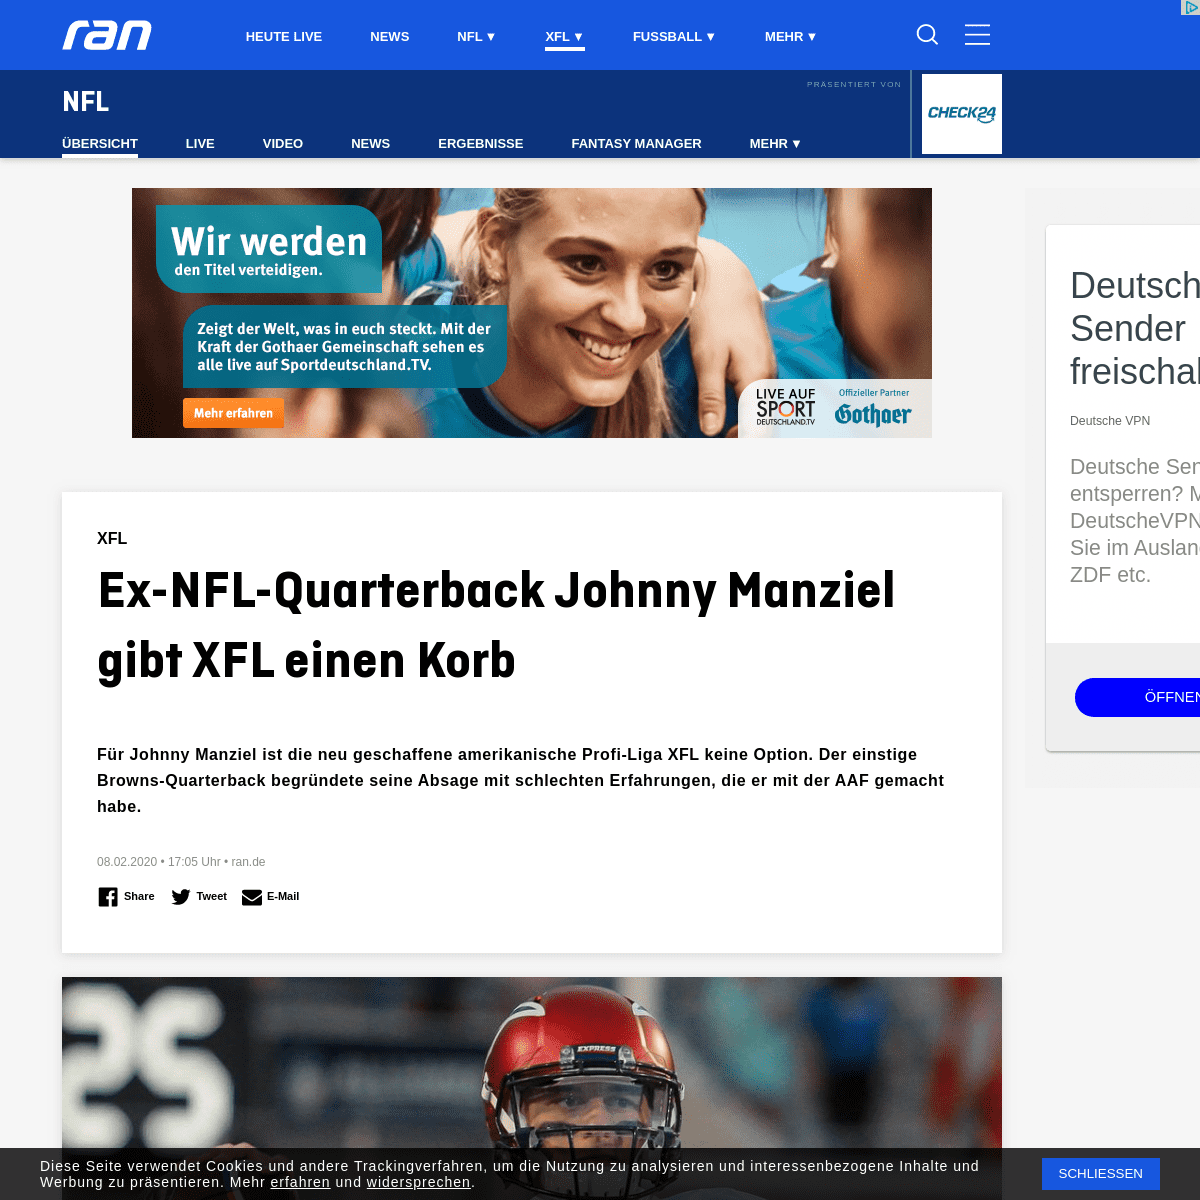 A complete backup of www.ran.de/us-sport/nfl/nfl-news/ex-nfl-quarterback-johnny-manziel-gibt-xfl-einen-korb-142698